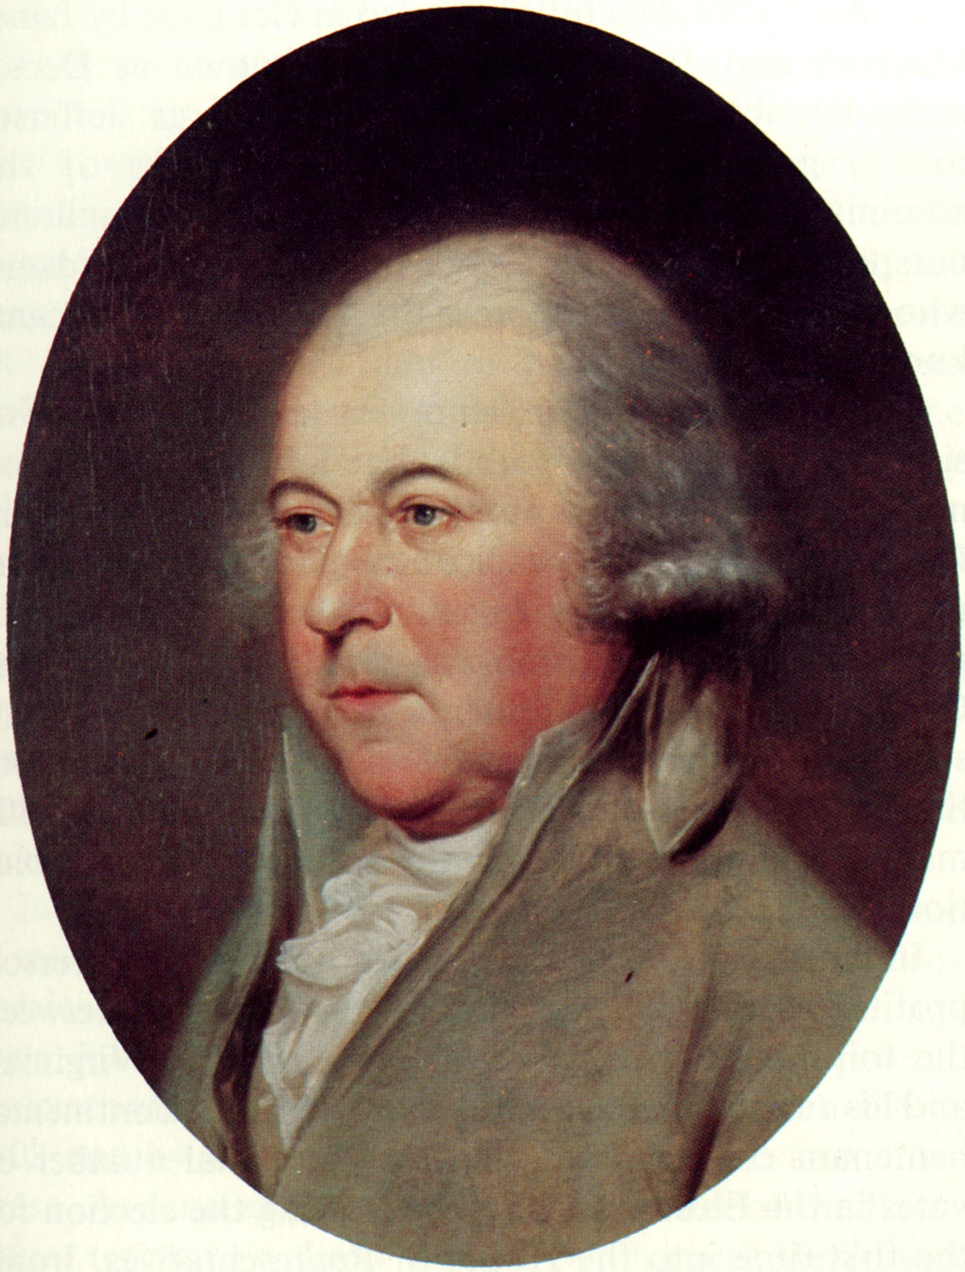 John Adams - Declaration Committee Member